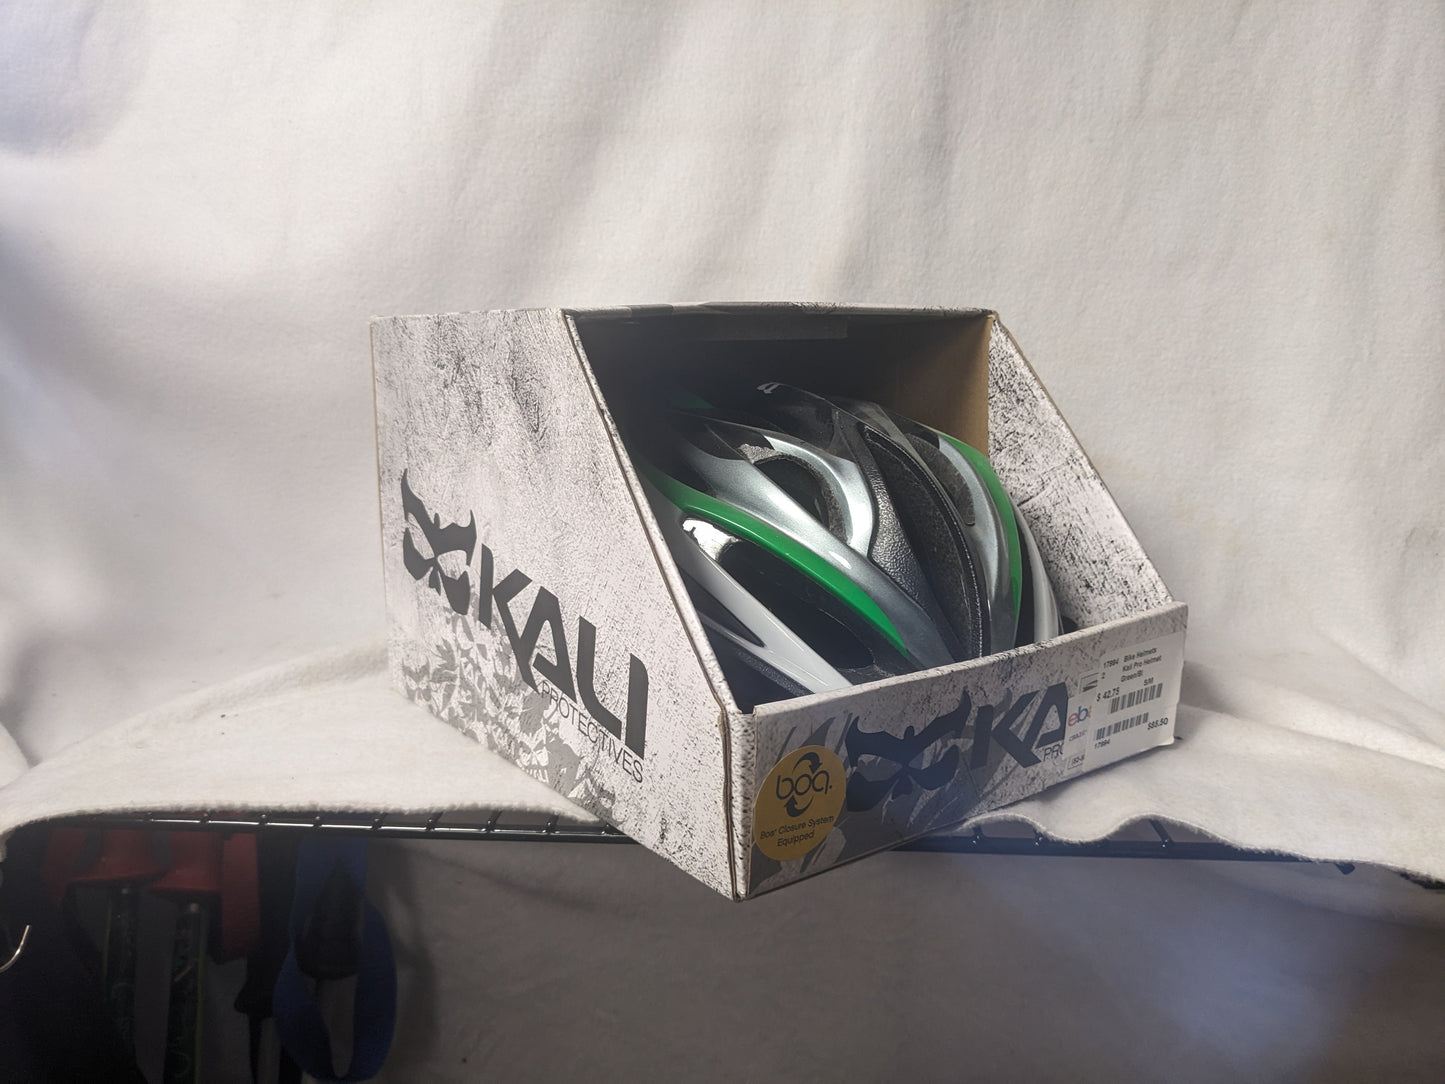 Kali Protectives Bike Helmet S/M Green, Black and White New Clearance